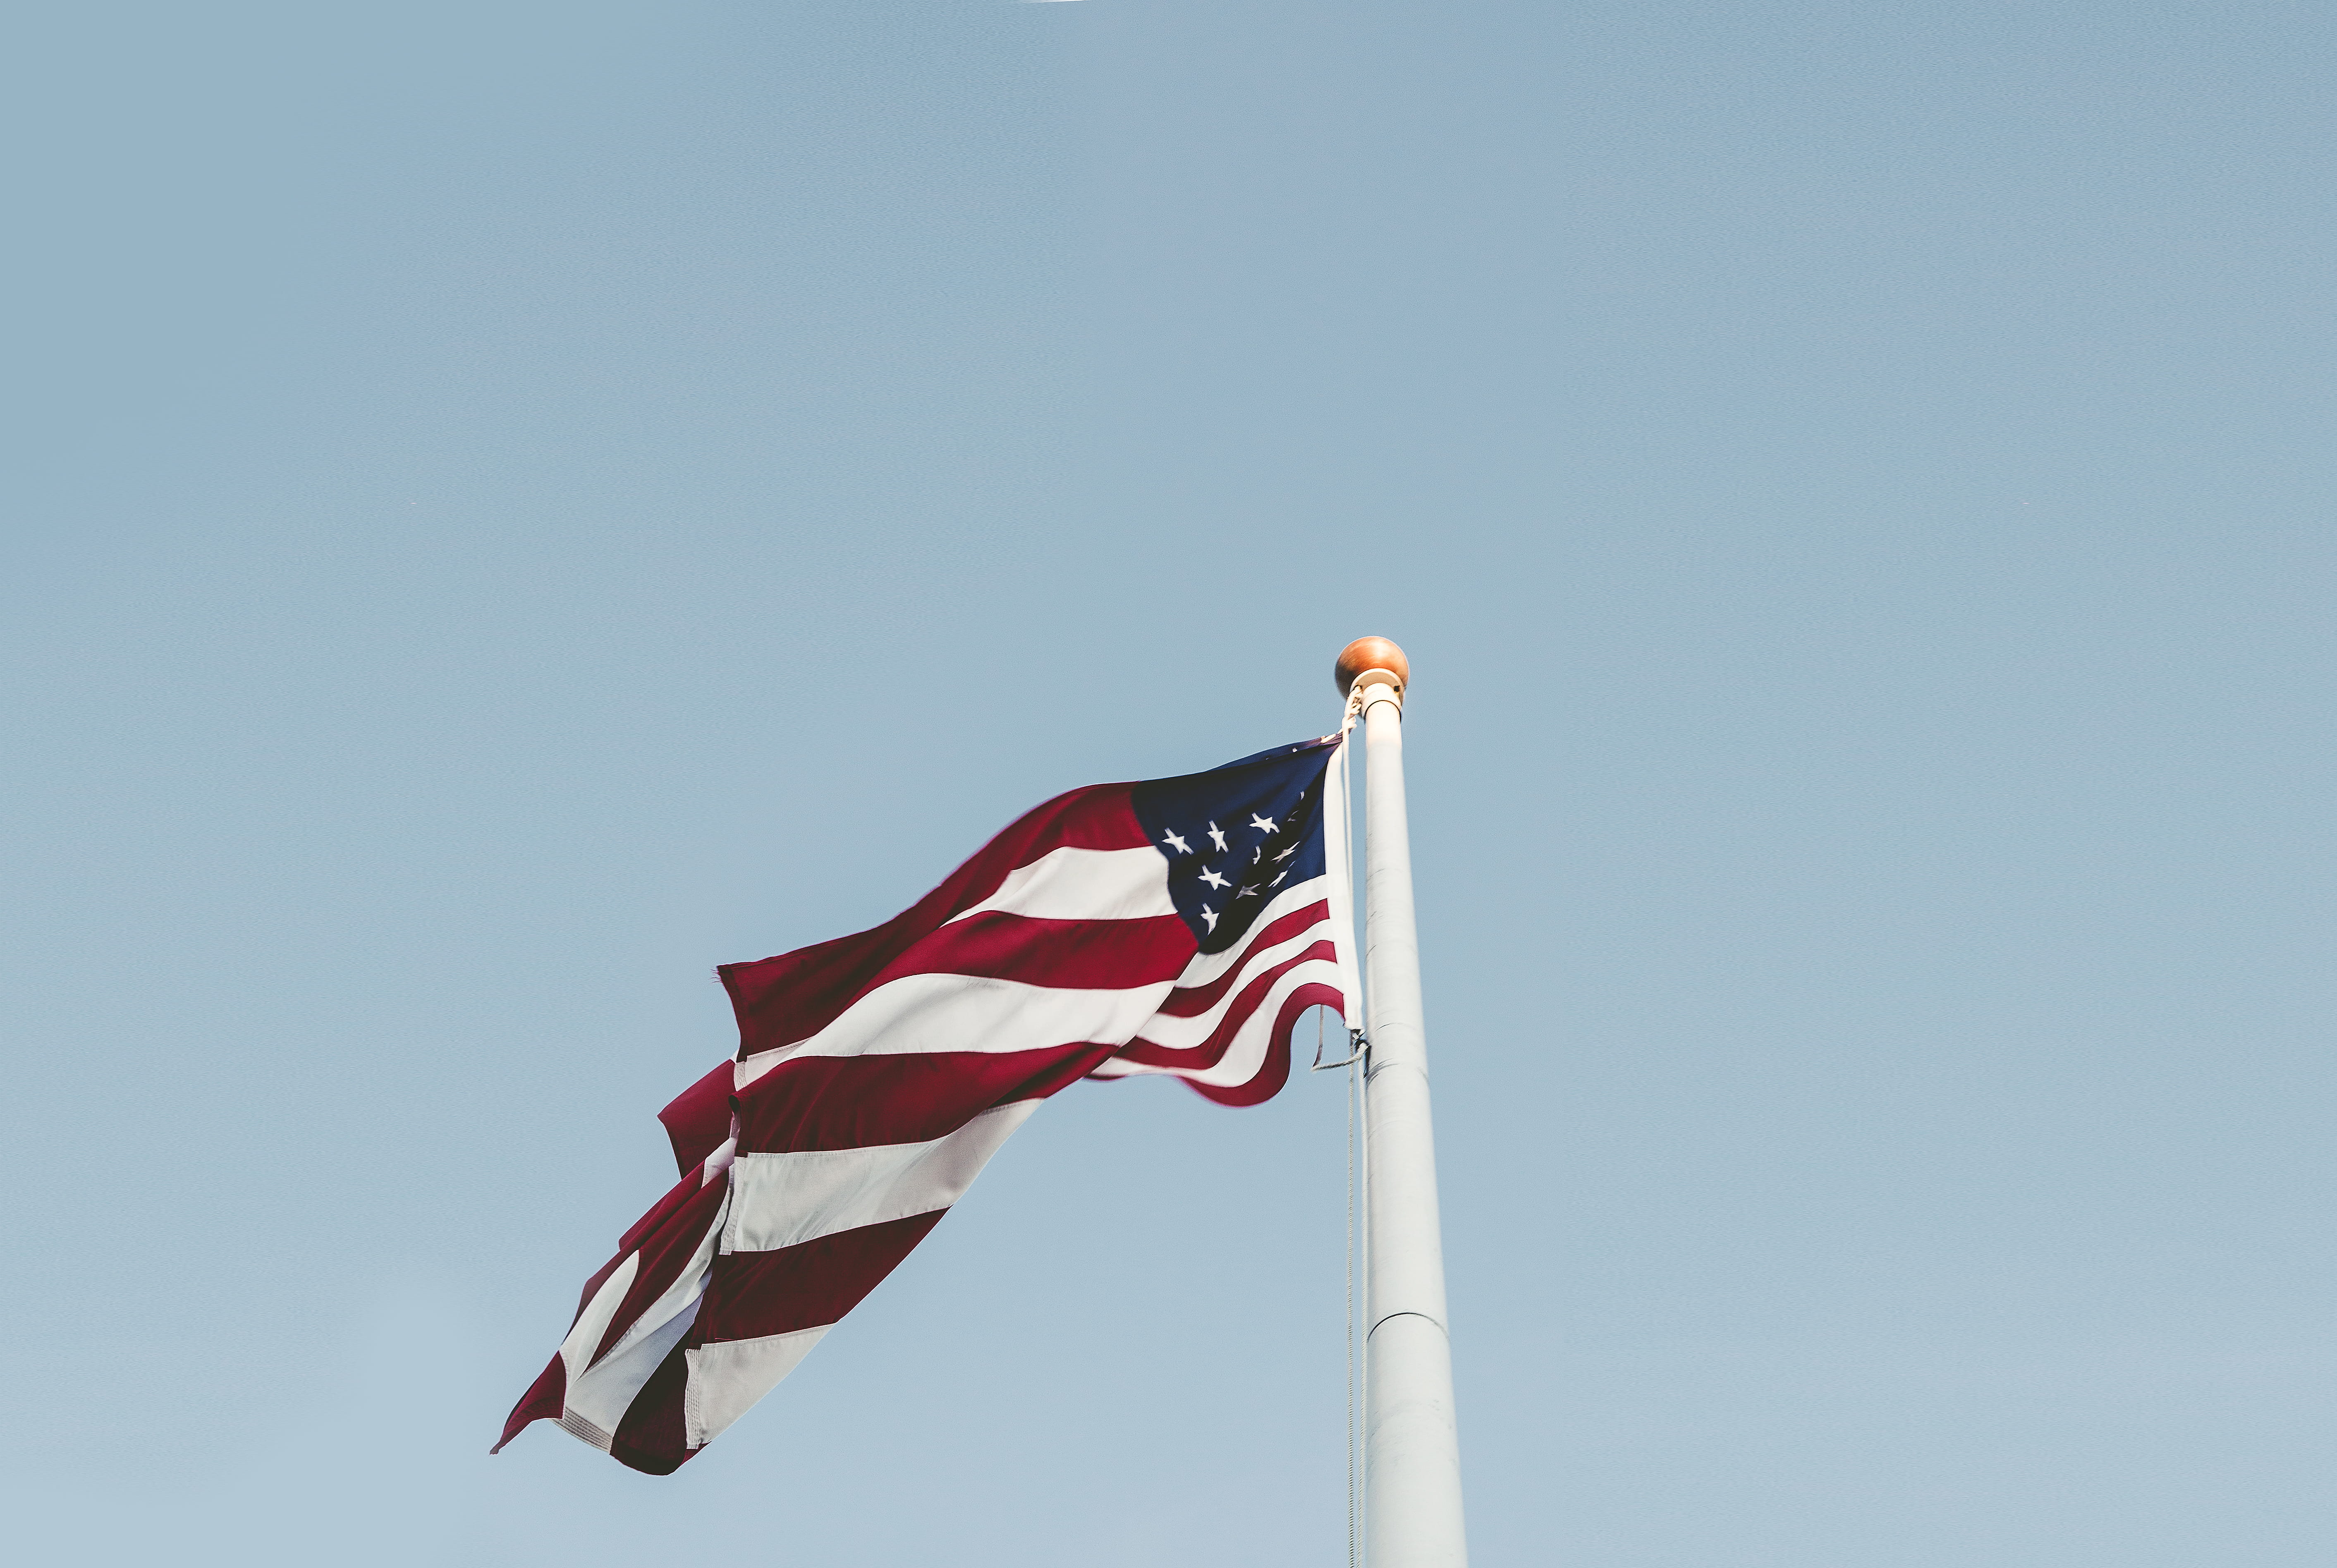 U.S.A flag under blue sky, worm's eye-view photography of USA flag